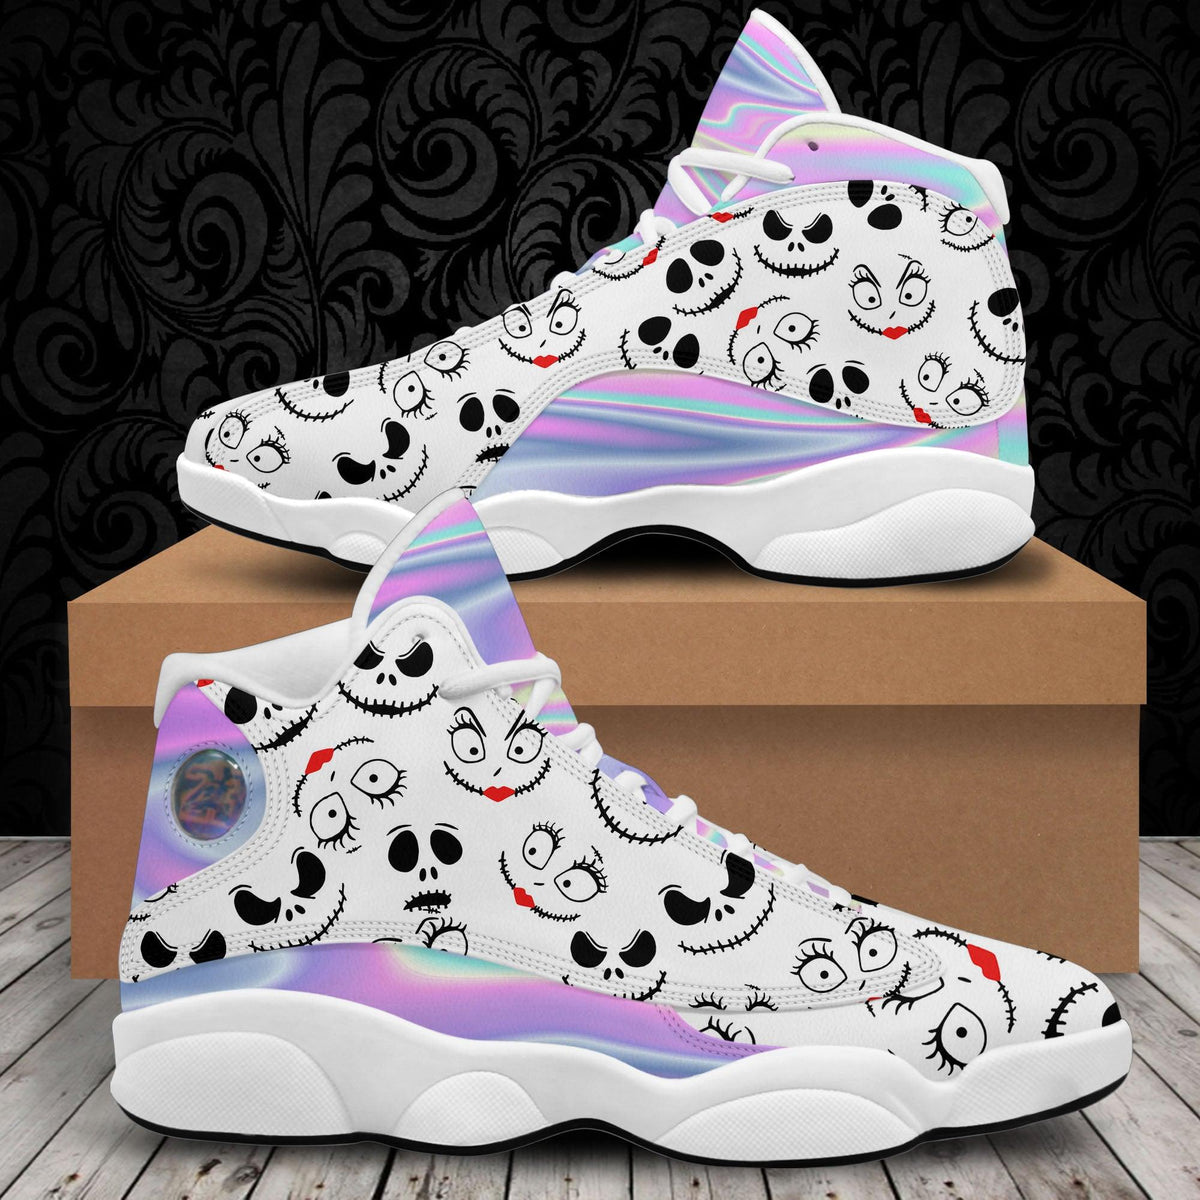 Nightmare Hologram Pattern Women's Curved Basketball Shoes Sneaker - Wonder Skull